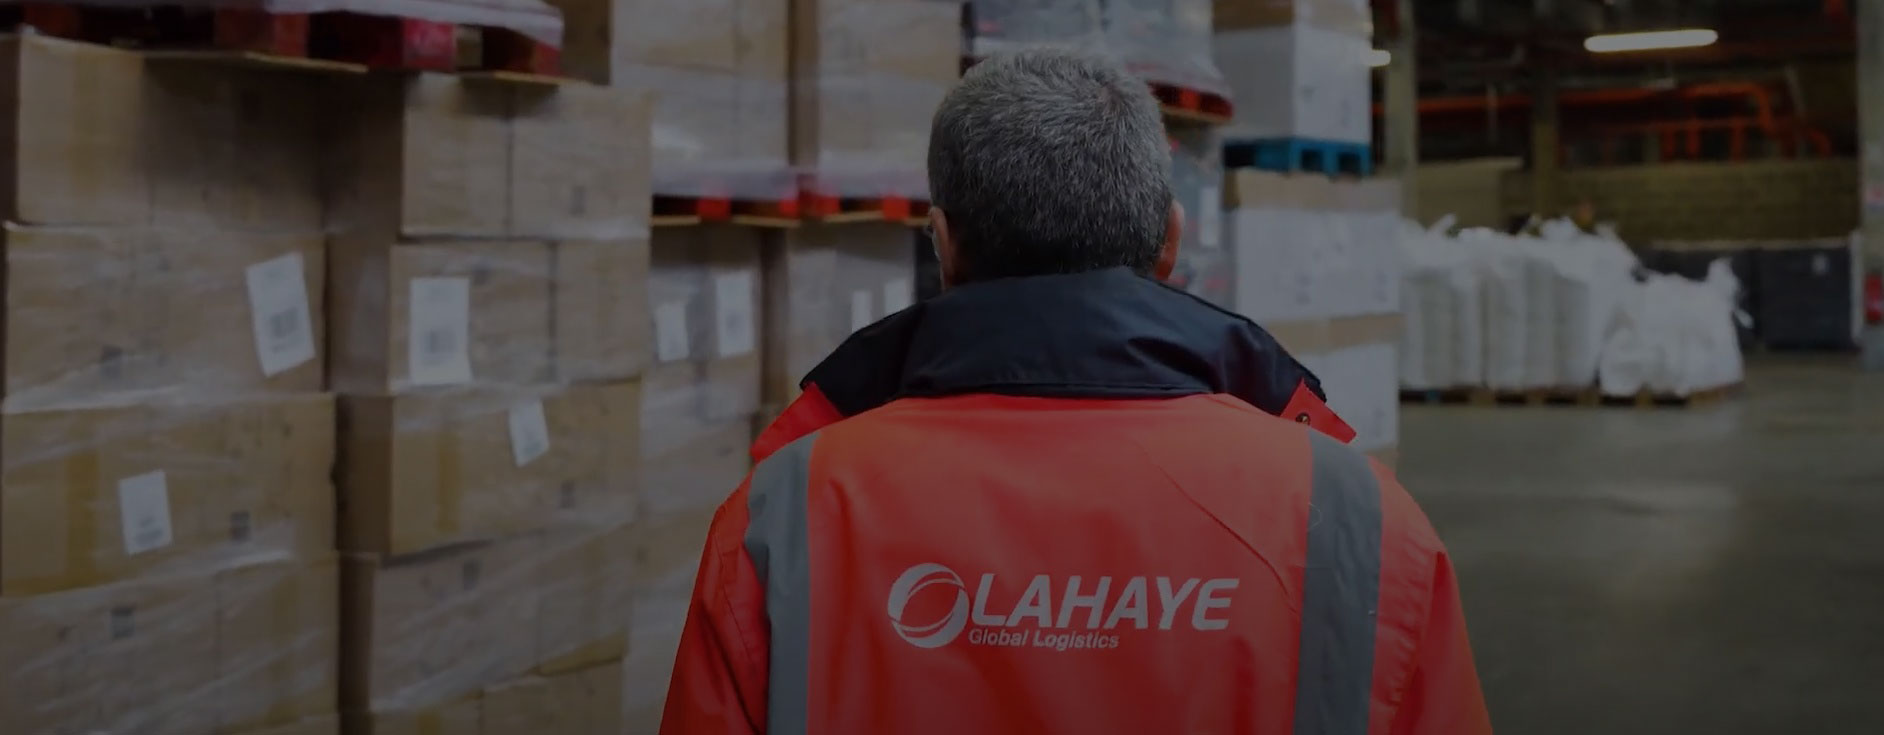 Lahaye Global Logistics Temoignage Vincent Header